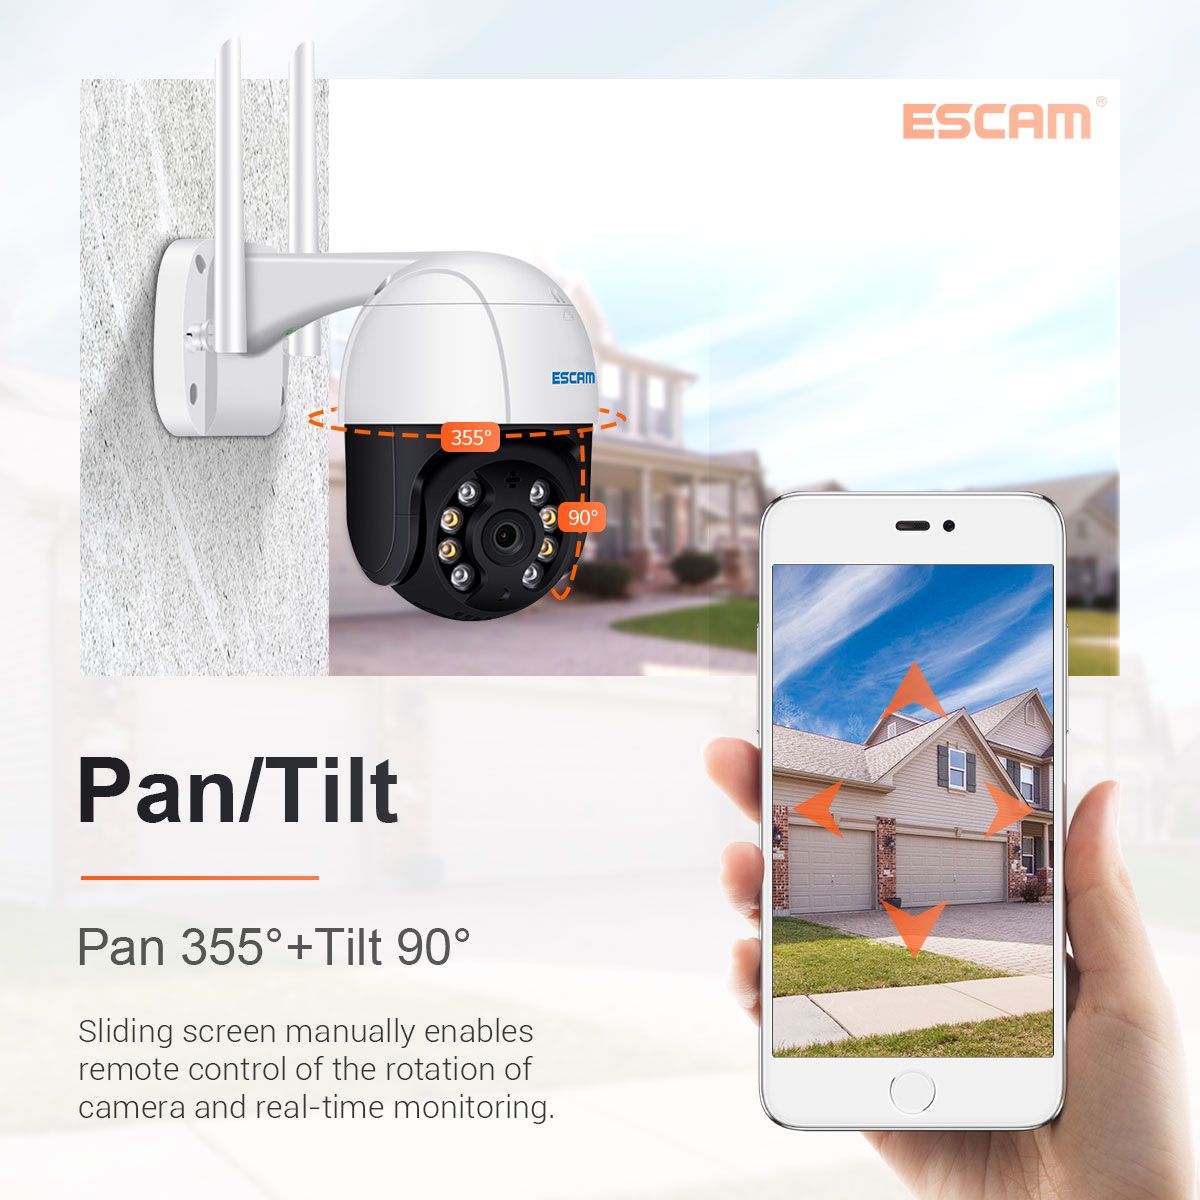 ESCAM-QF518-5MP-PanTilt-AI-Humanoid-Detection-Auto-Tracking-Cloud-Storage-Waterproof-WiFi-IP-Camera--1731086